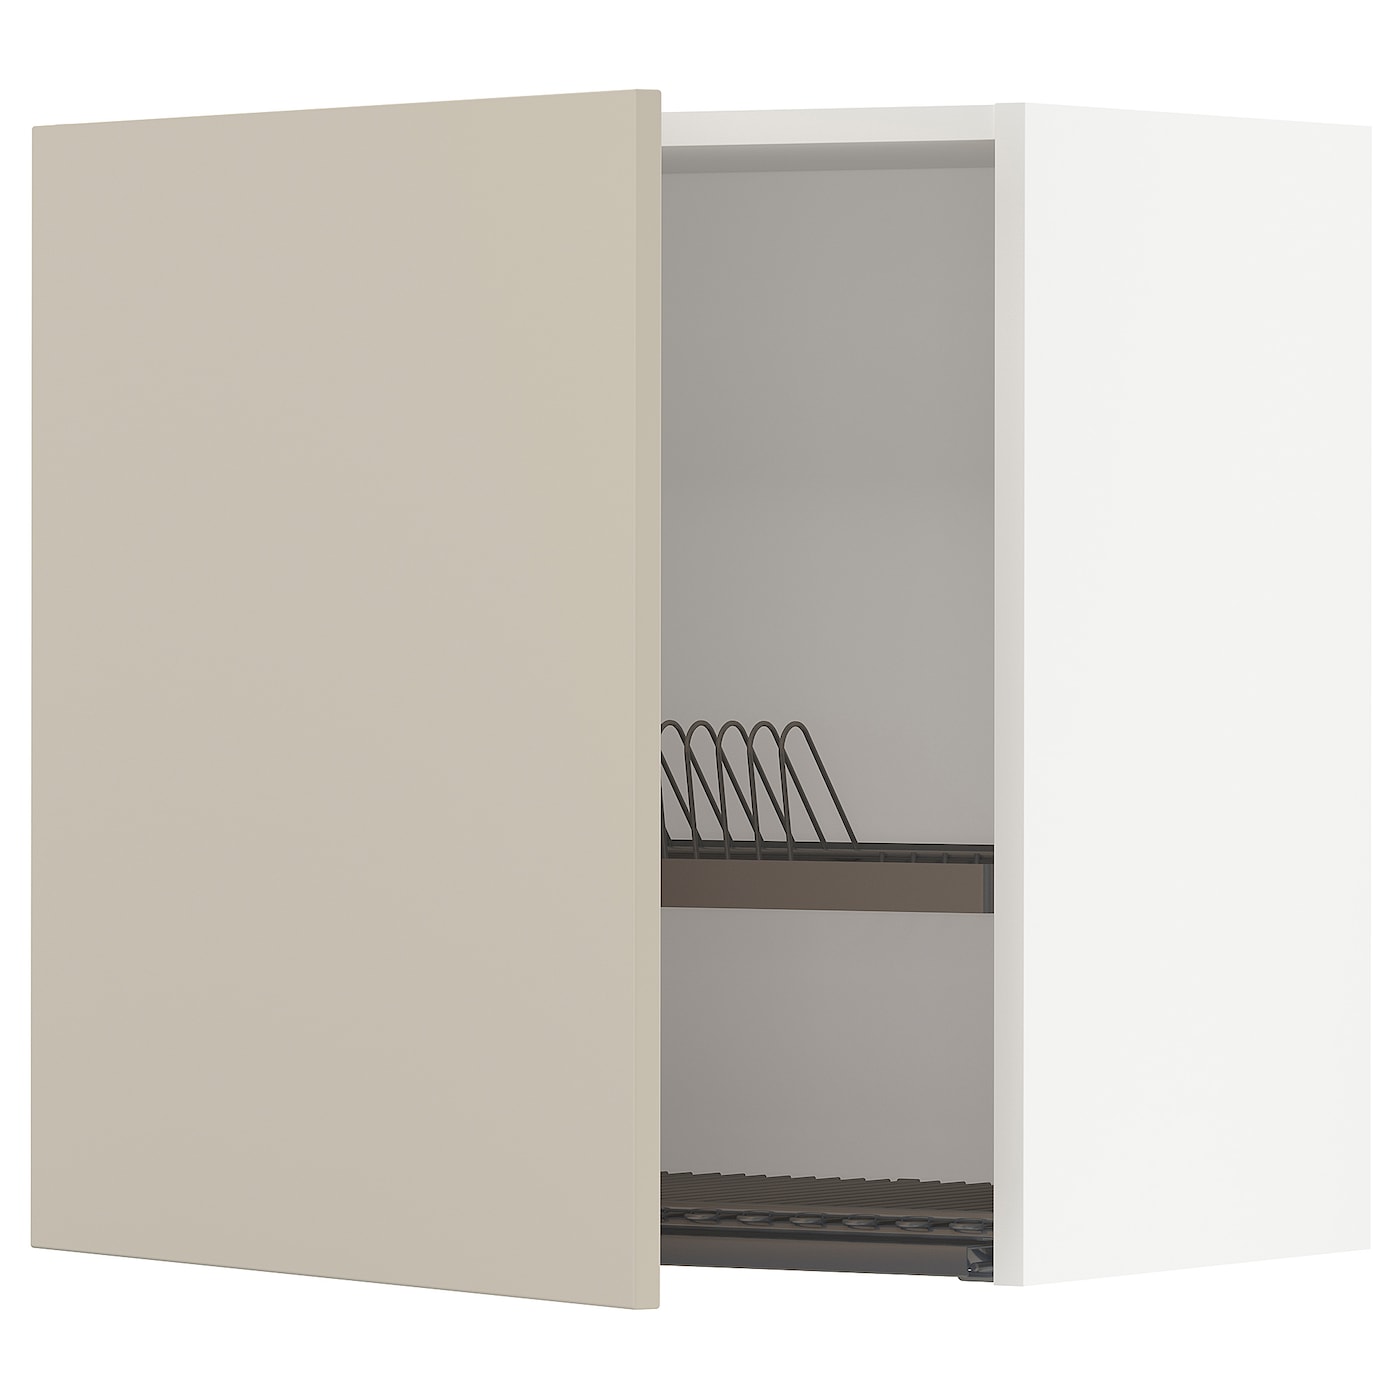 Навесной шкаф с сушилкой - METOD IKEA/ МЕТОД ИКЕА, 60х60 см, белый/бежевый